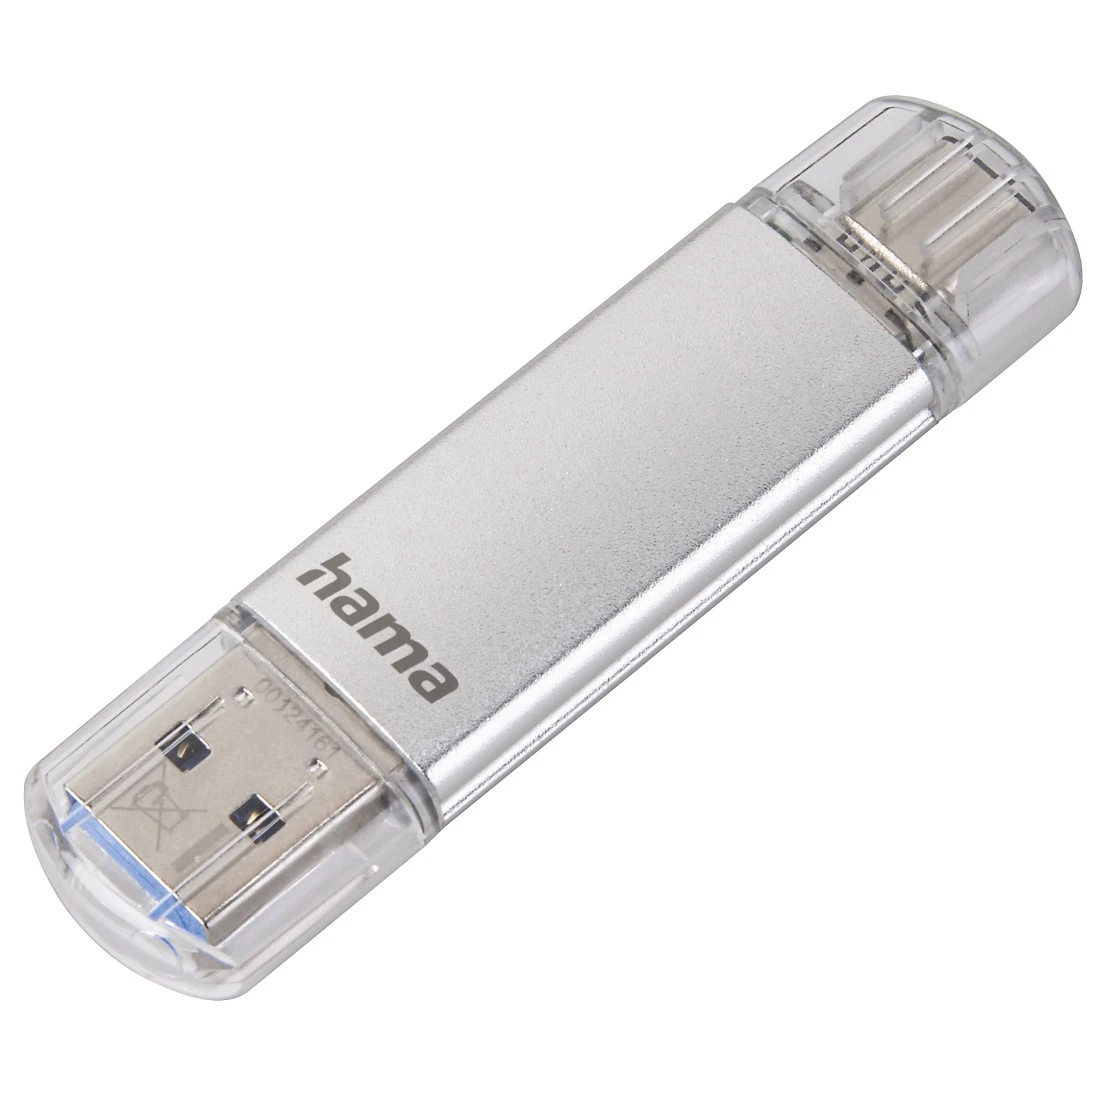 Acheter Clé USB 512 Go Hama C-Rotate Pro (00182493)